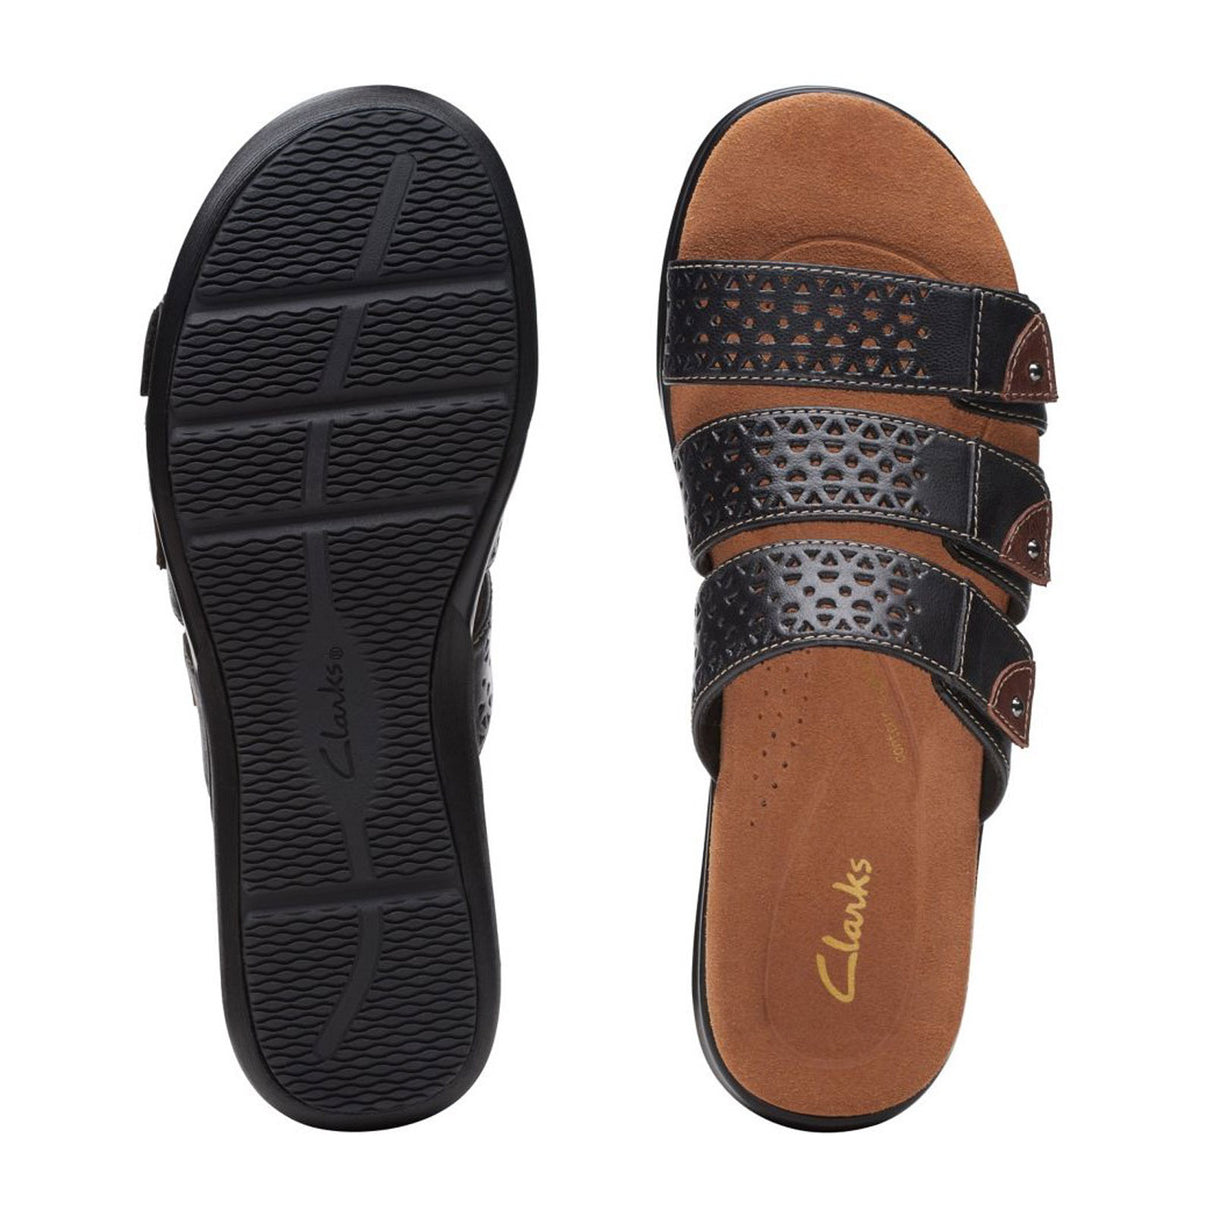 Clarks Kitly Walk Wide Slide Sandal (Women) - Black Sandals - Slide - The Heel Shoe Fitters